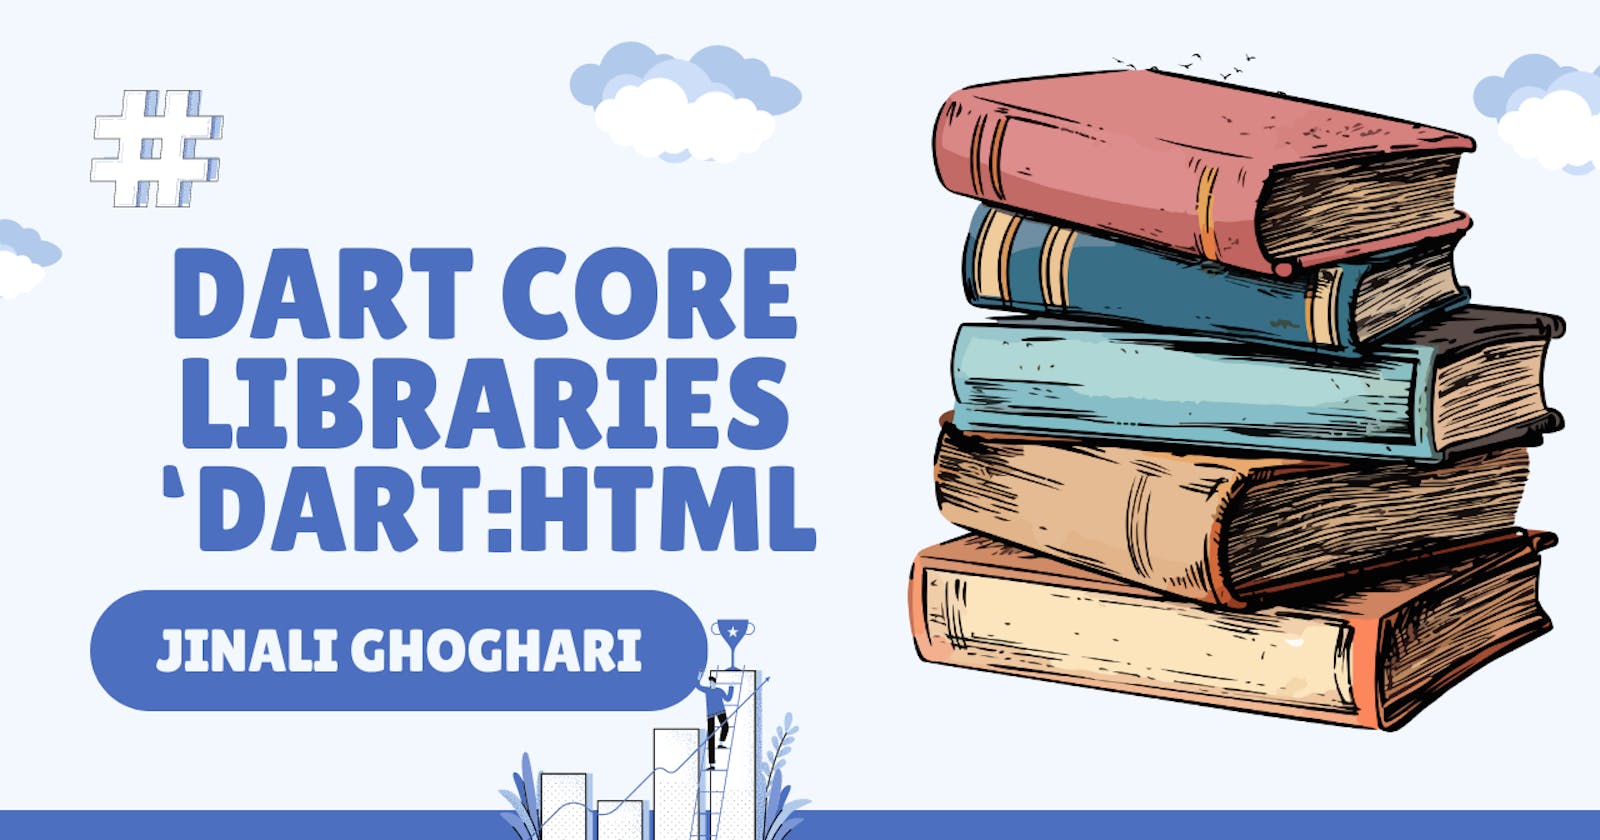 Dart Core Libraries 'dart:html'